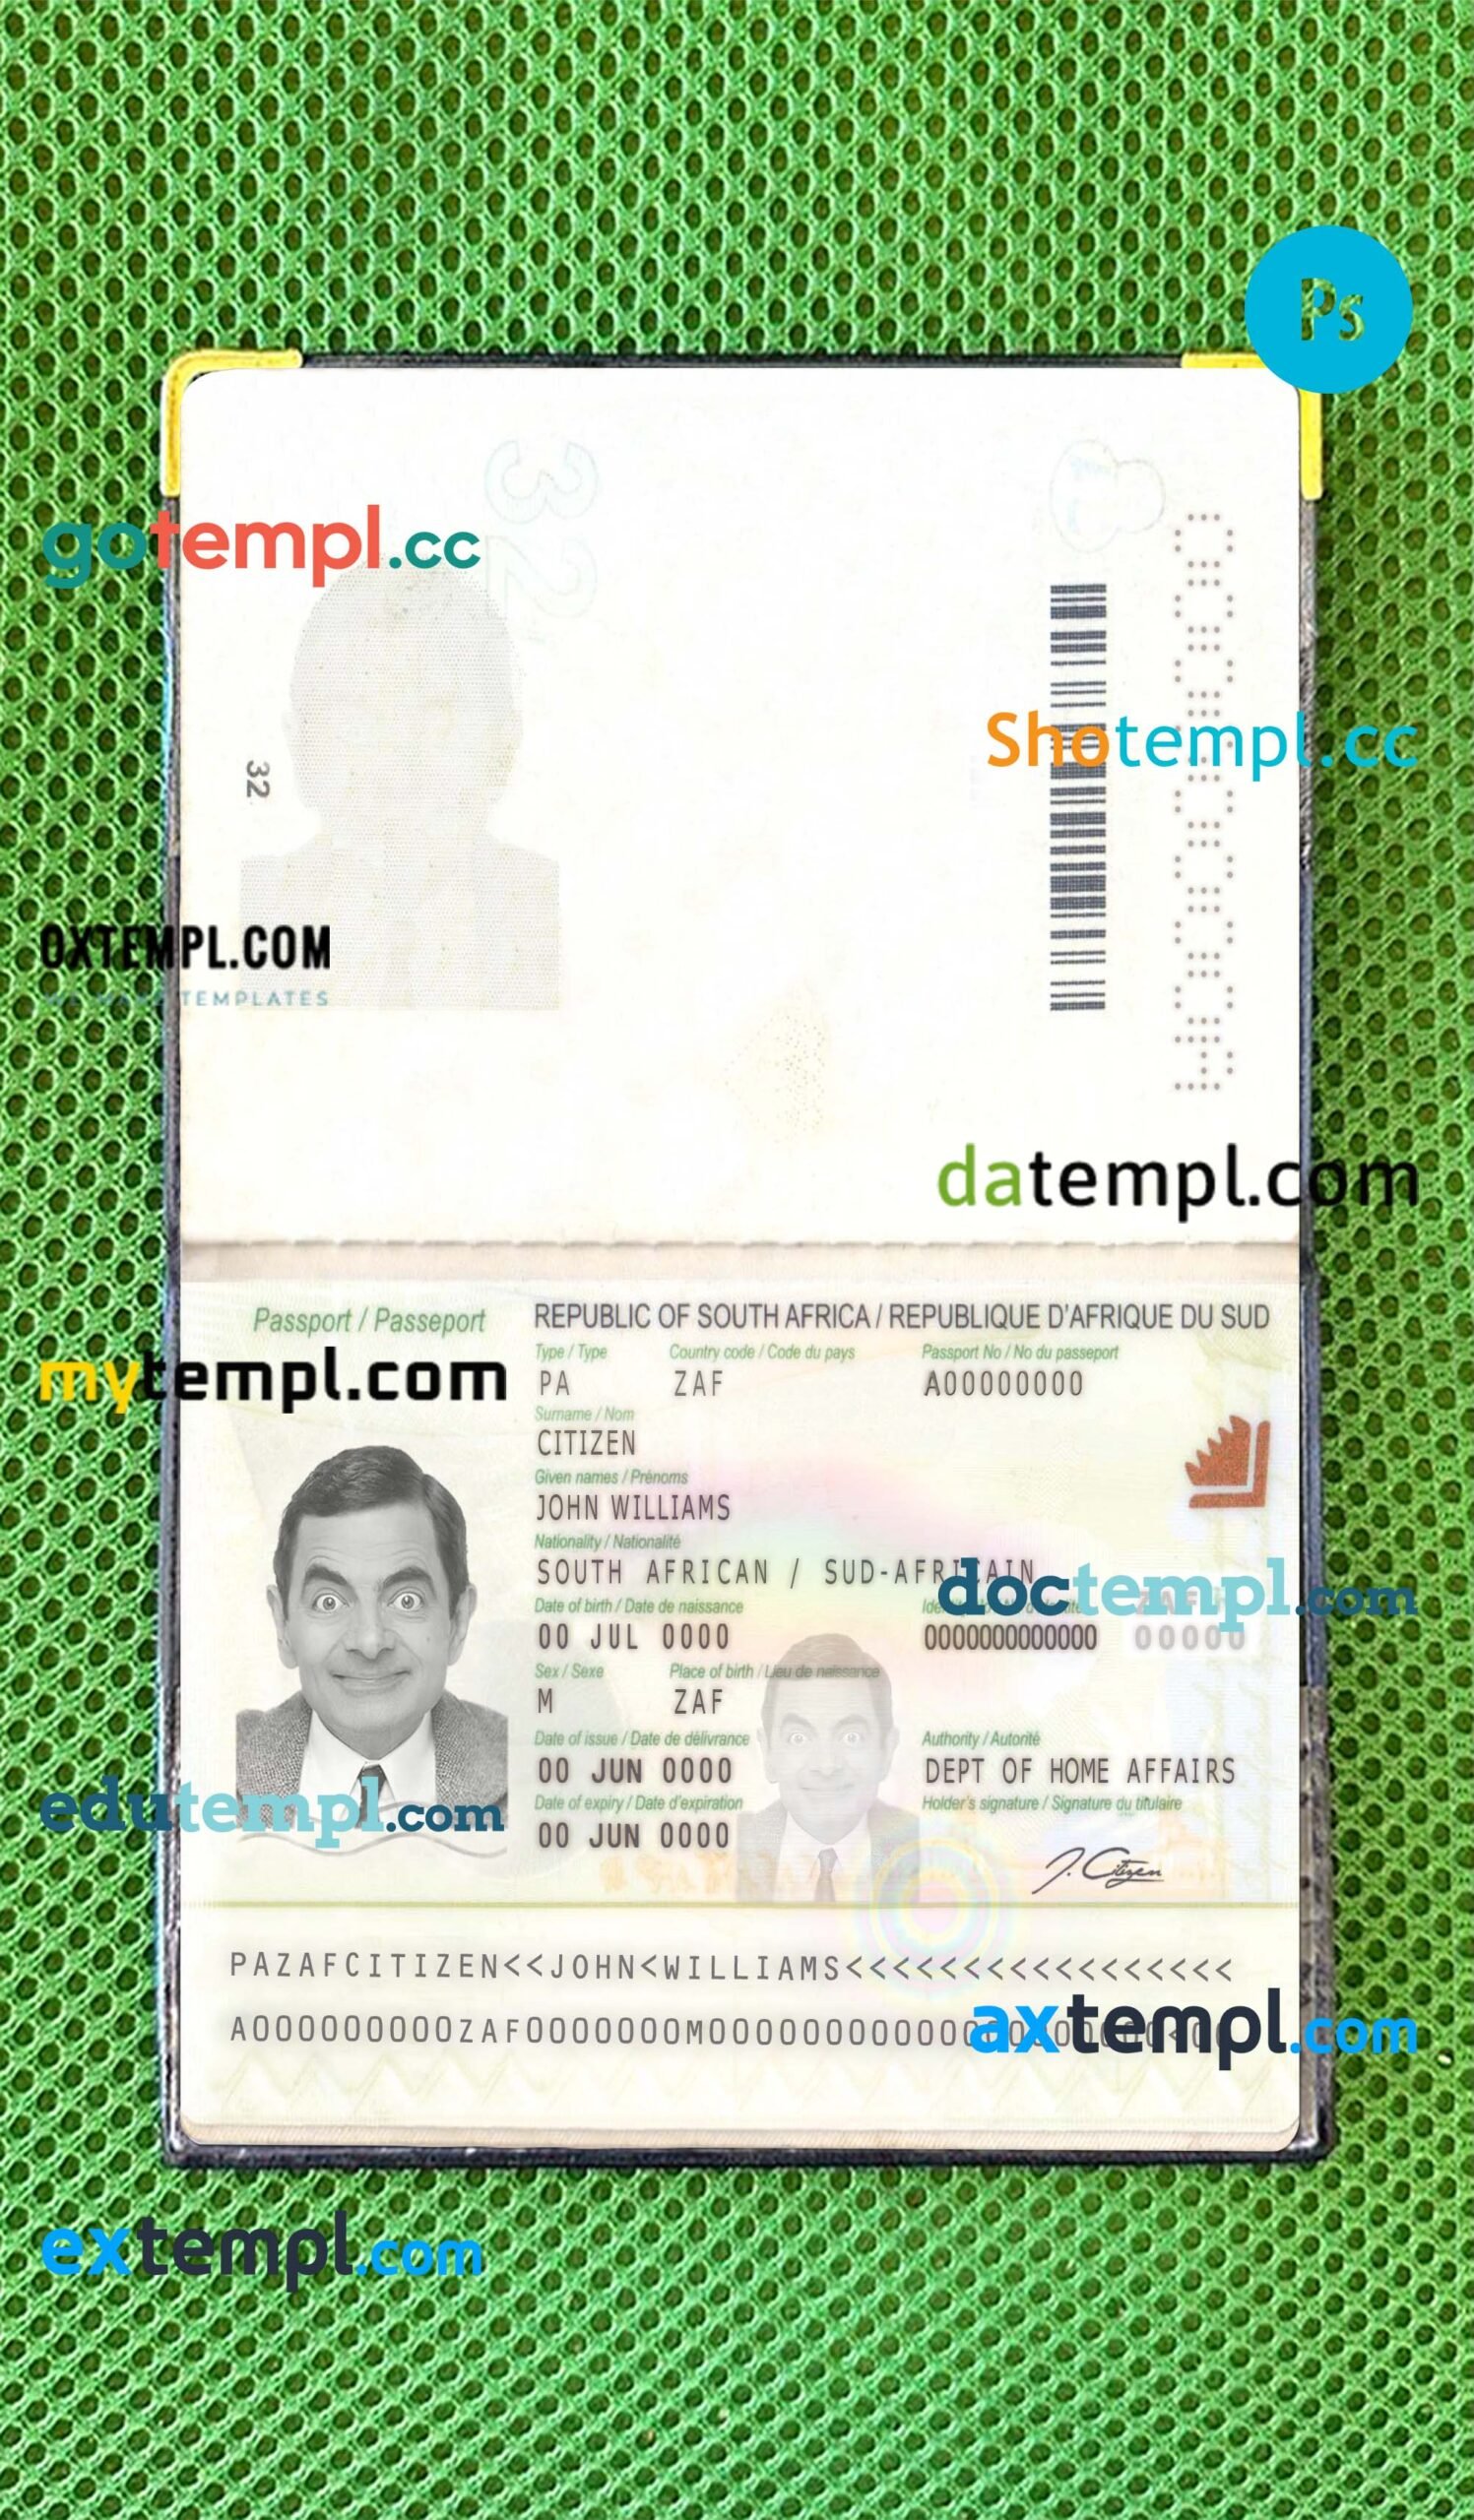 Bangladesh passport editable PSD files, scan and photo taken image (2013-2019), 2 in 1